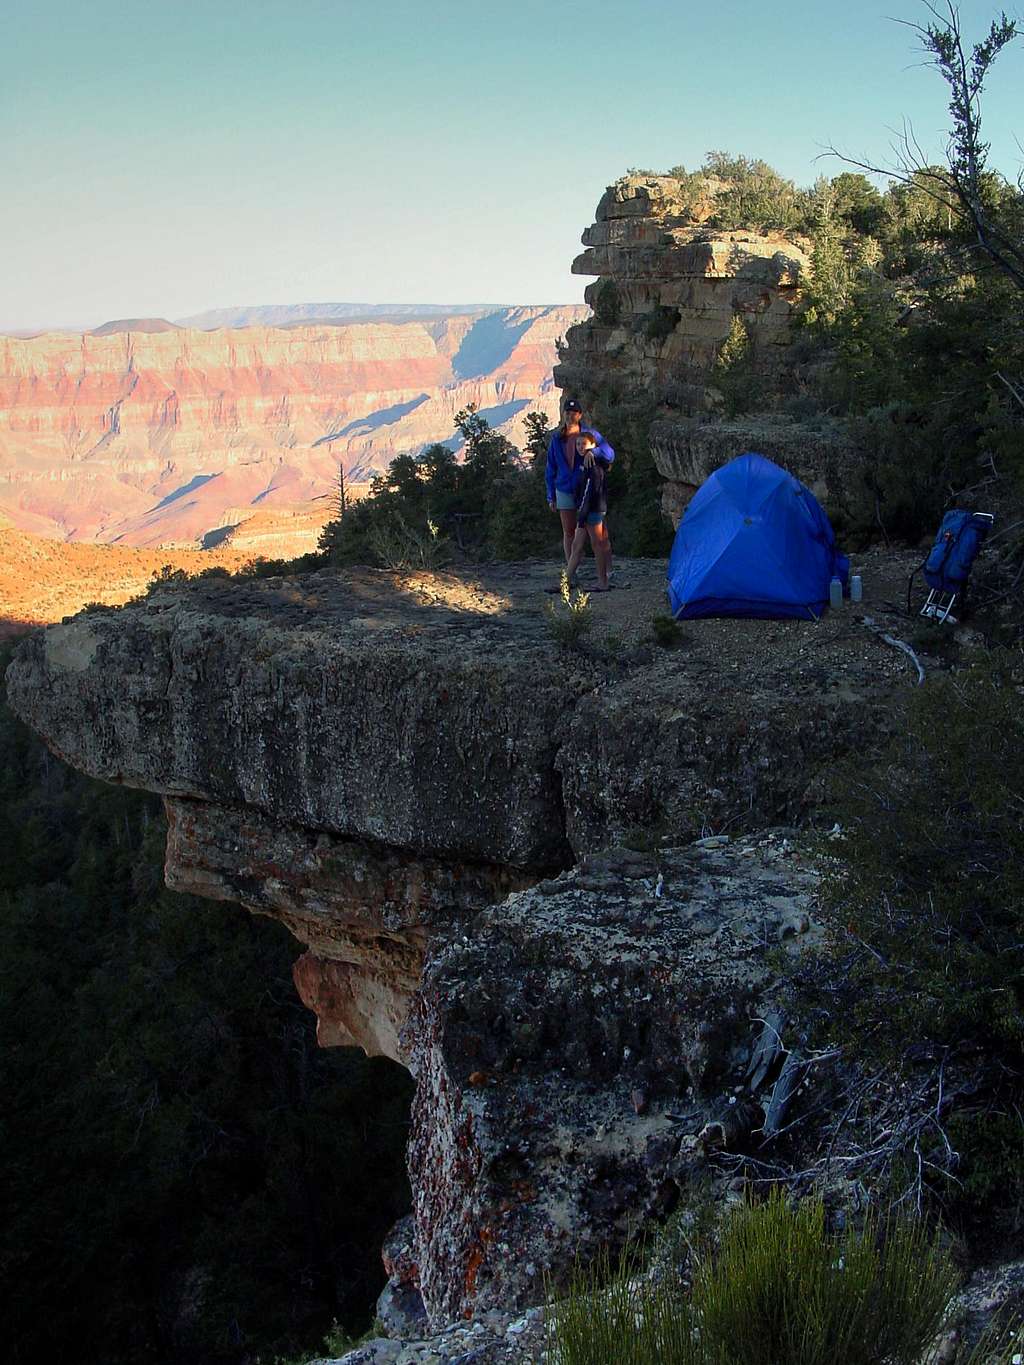 camp on the edge